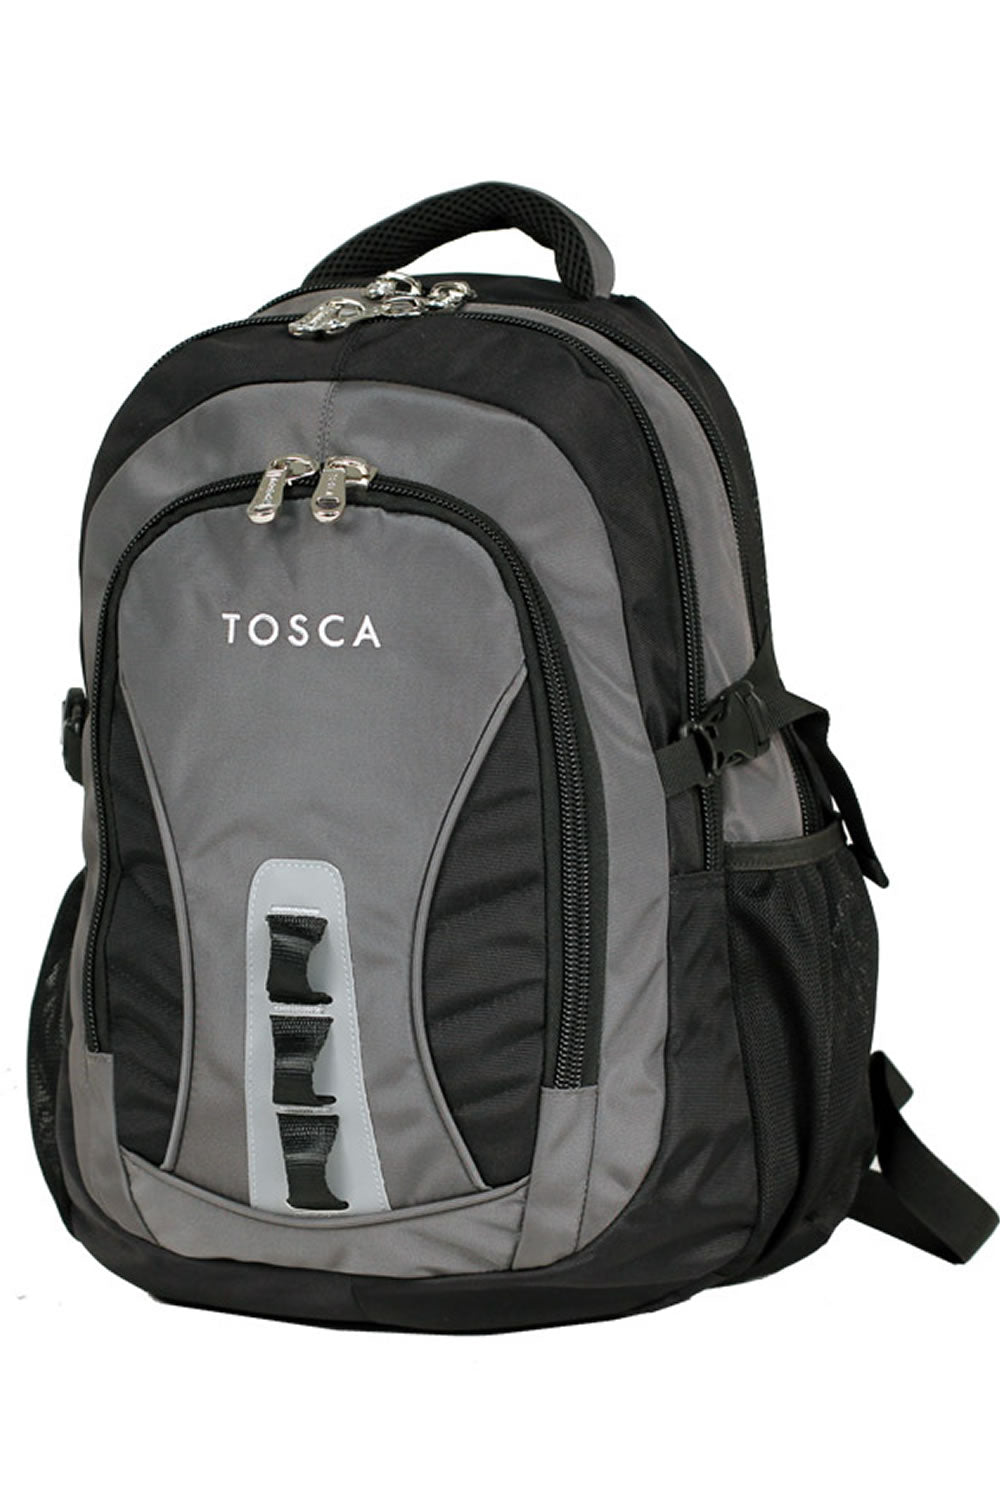 Tosca Backpack